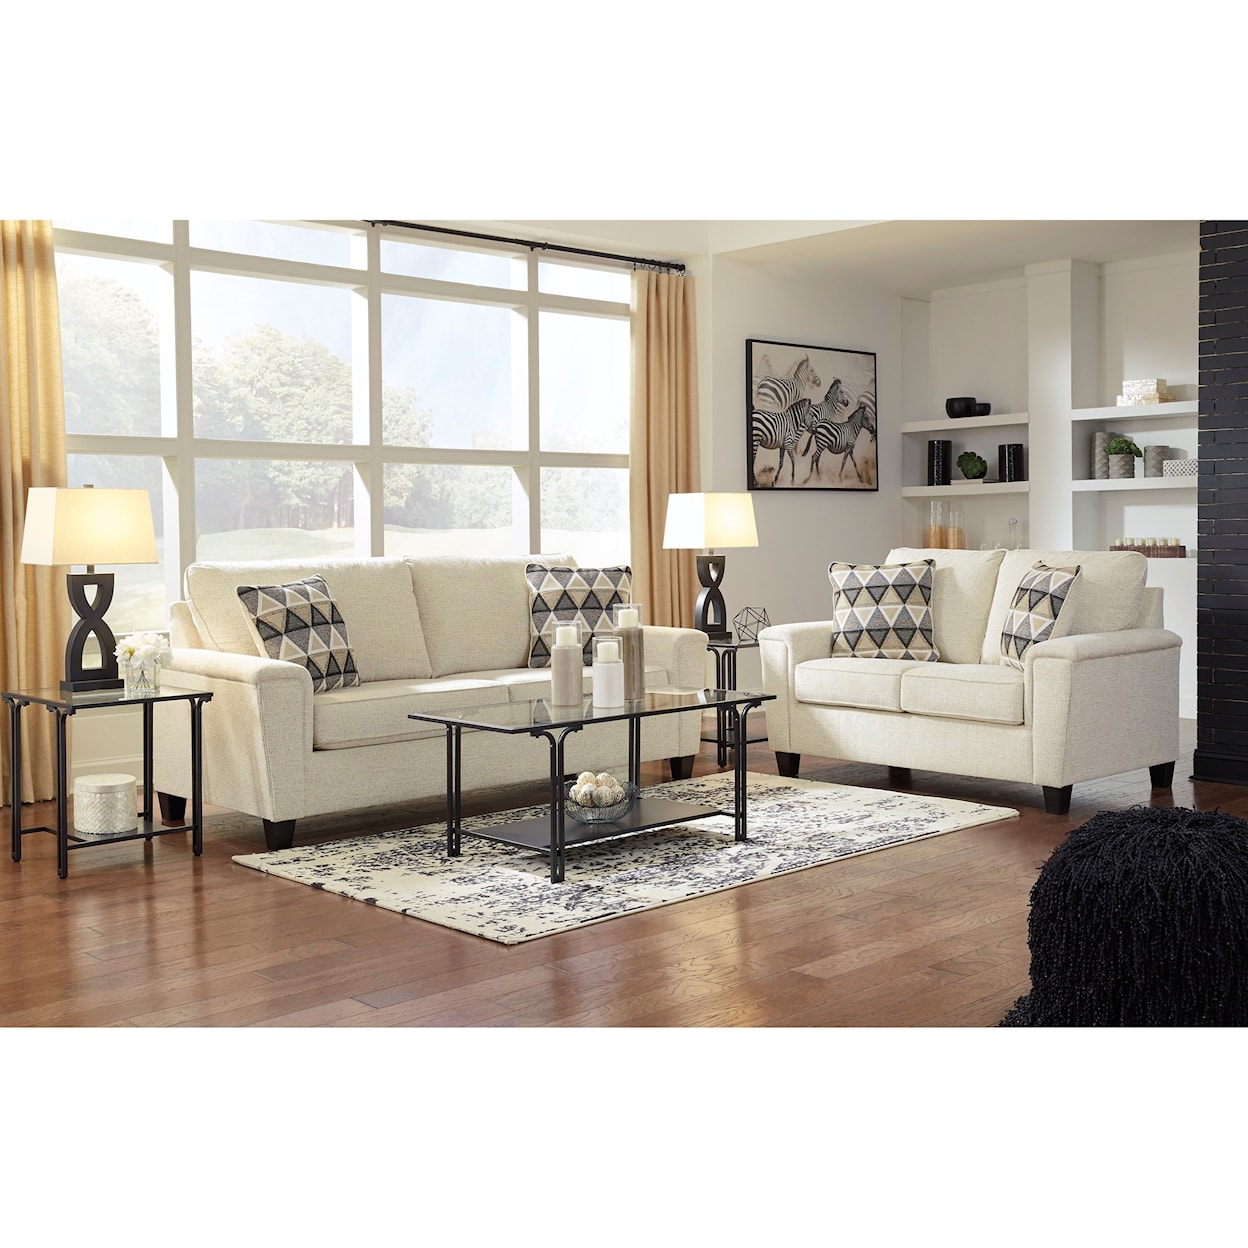 Ashley Furniture Signature Design Abinger Living Room Group